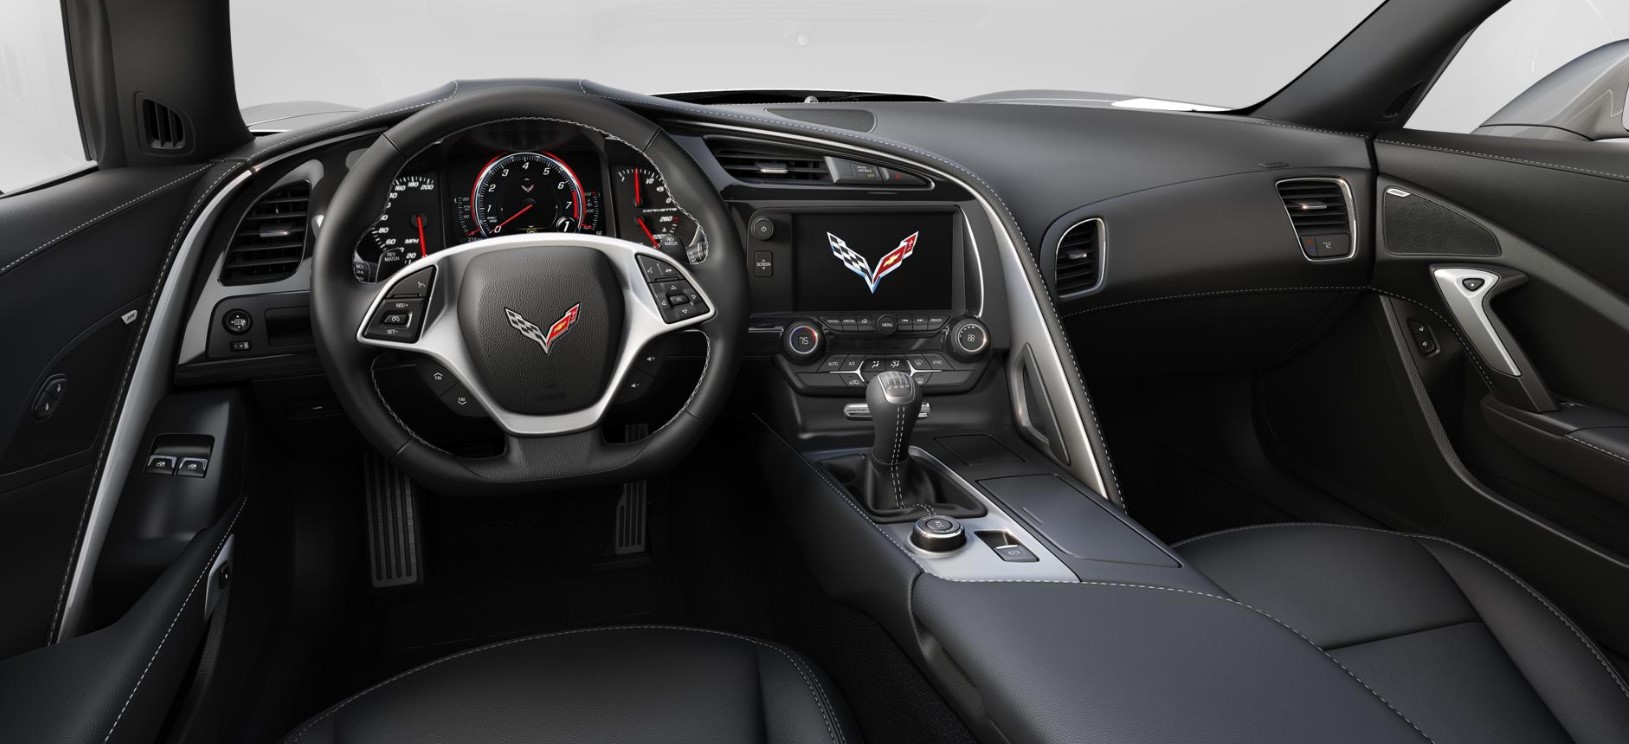 2018 Chevrolet Corvette Grand Sport Black Leather Interior